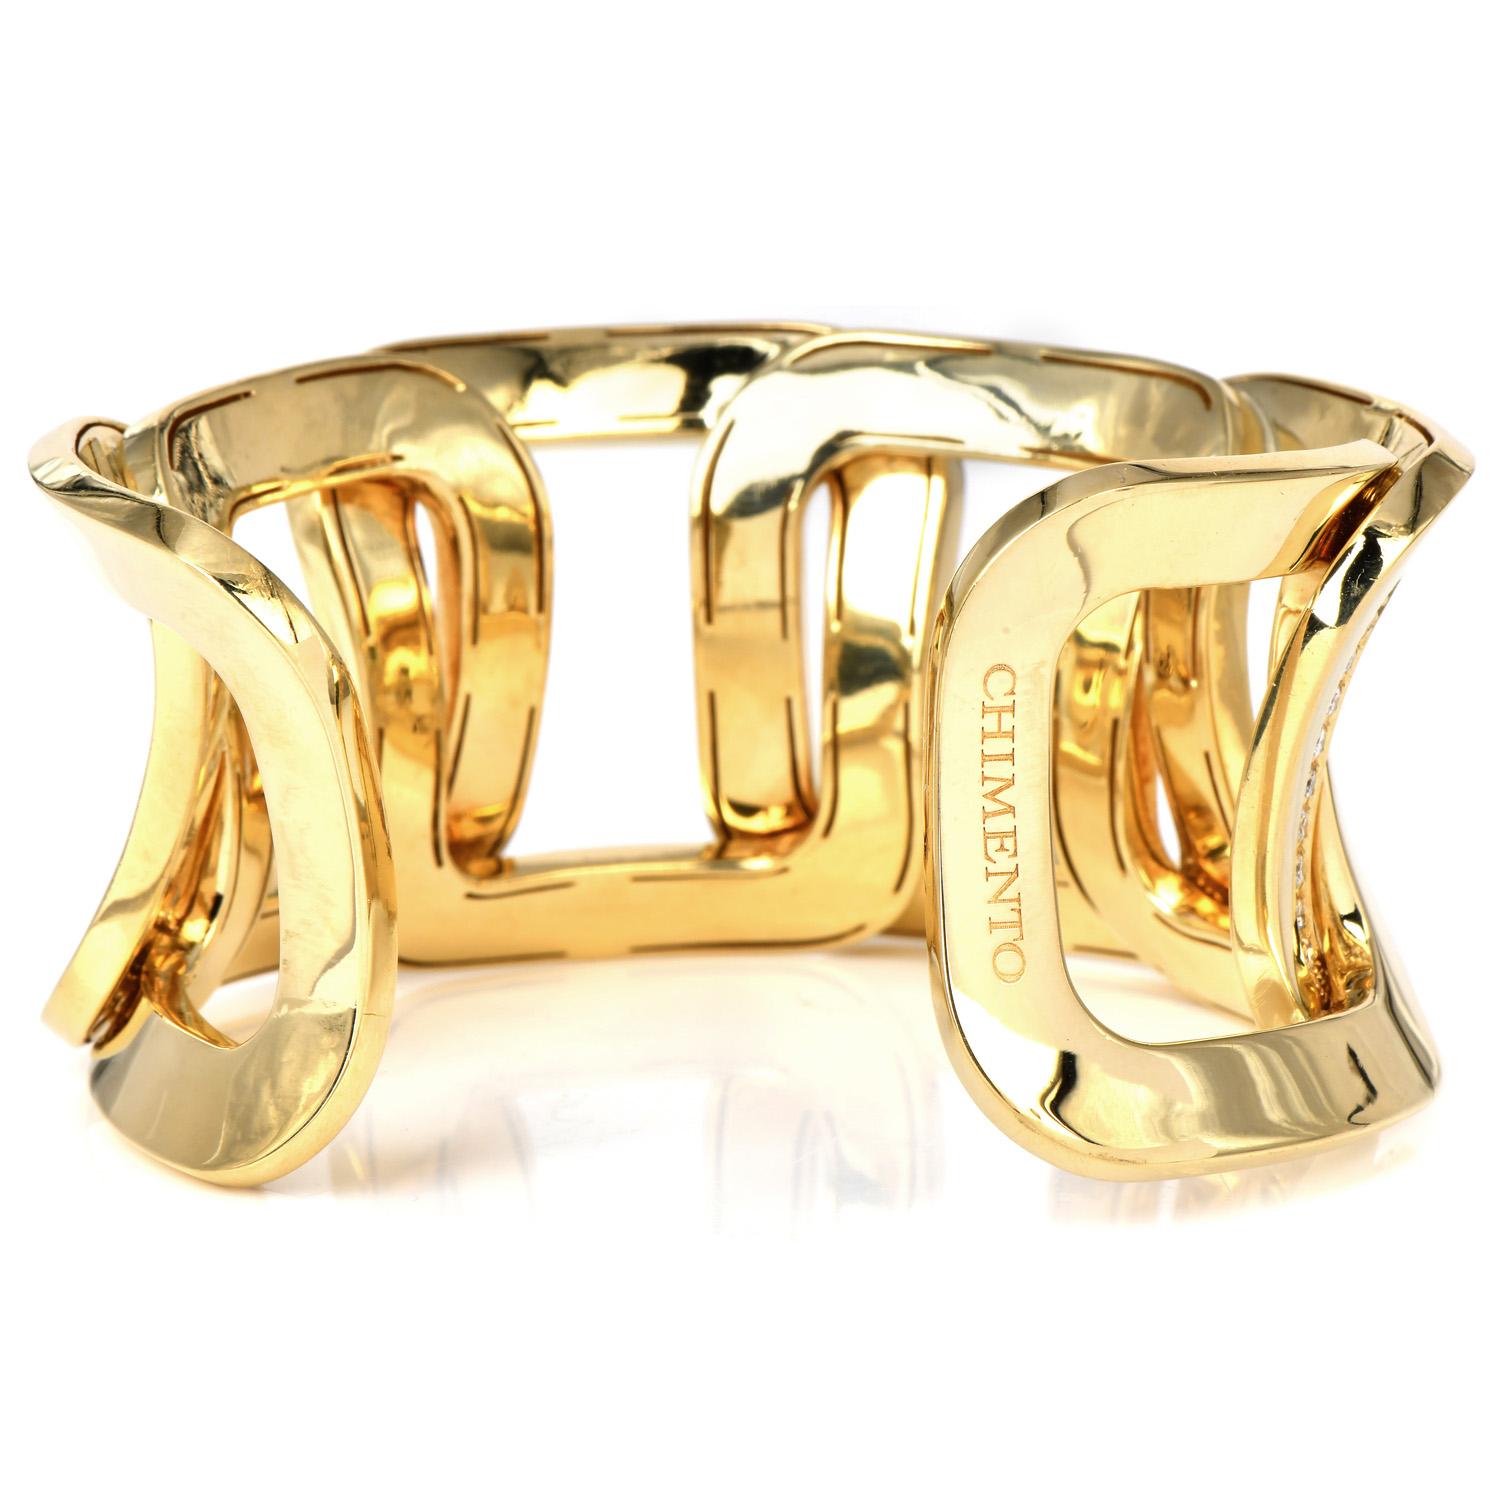 Round Cut Chimento High Polish 4.50cts Diamond 18k Gold Wide Cuff Bangle Bracelet